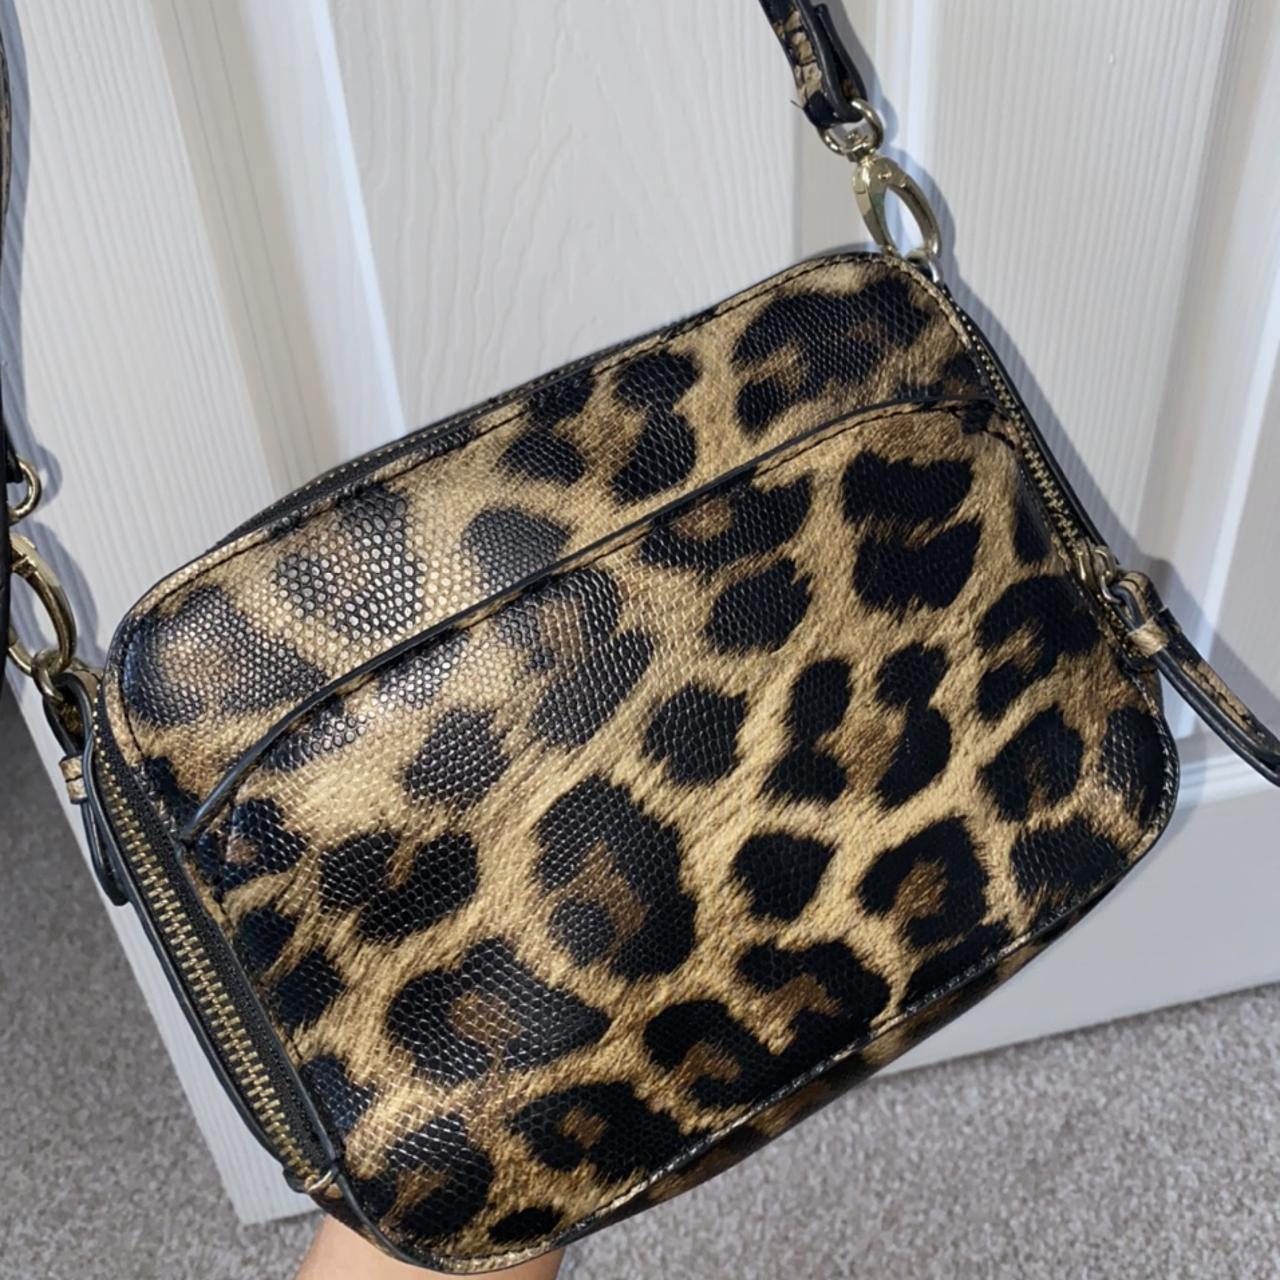 Accessorize leopard print purse